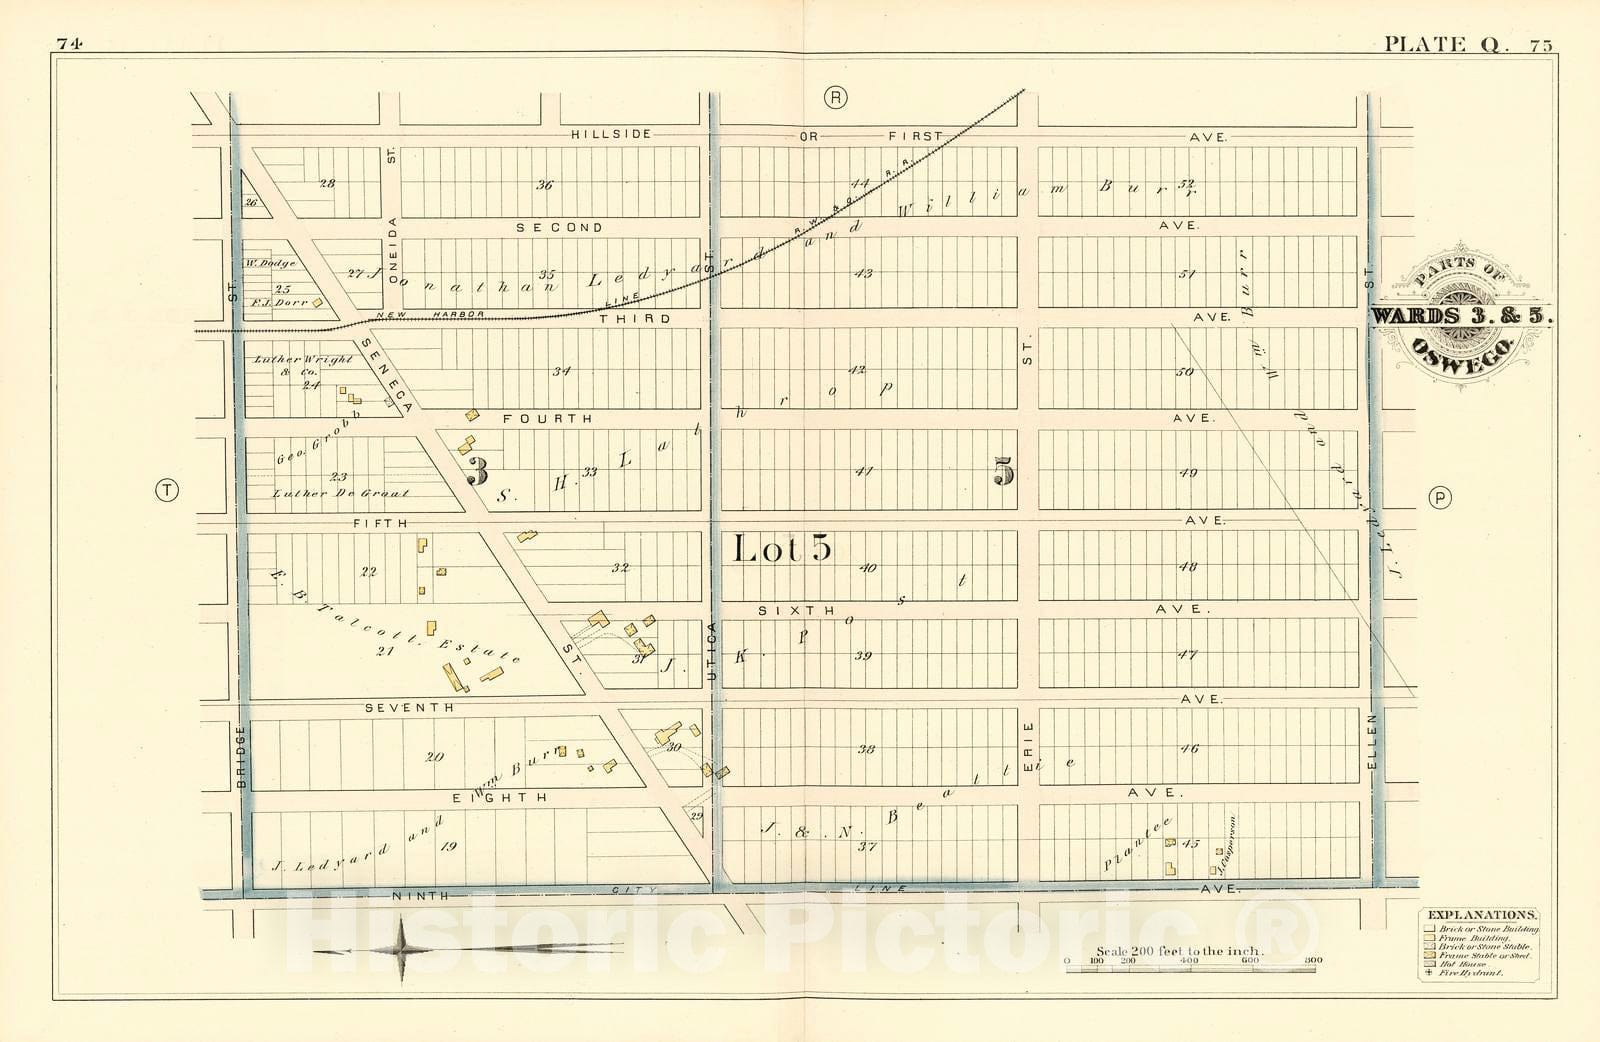 Historic 1880 Map - City Atlas of Oswego, New York - Parts of Wards 3. & 5. Oswego. Plate Q. - Atlas of The City of Oswego N.Y.